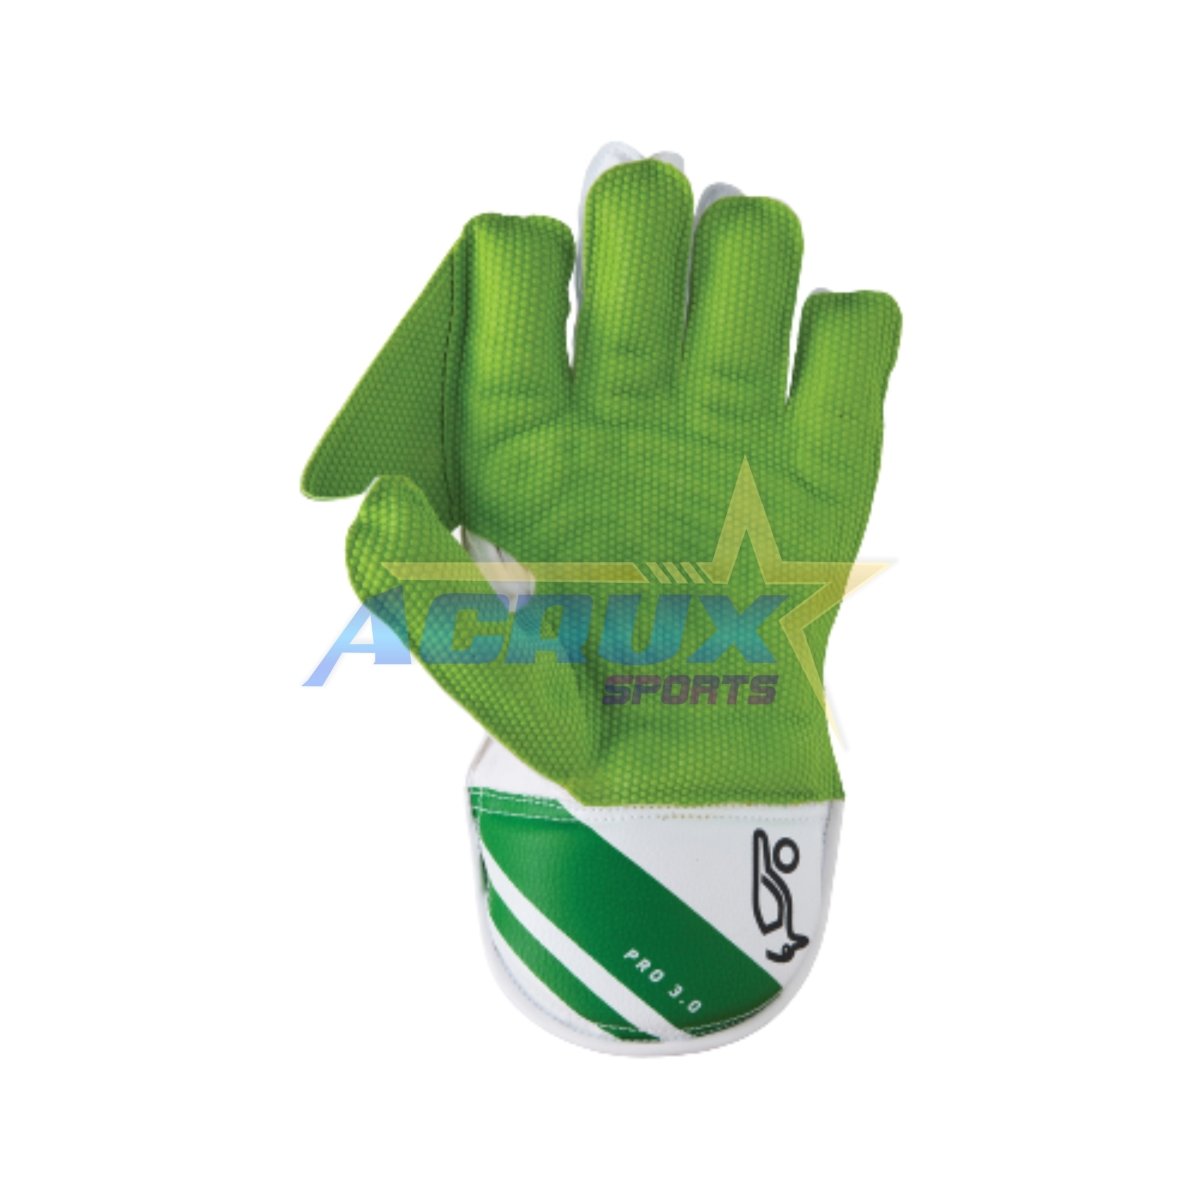 Kookaburra Kahuna Pro 3.0 Cricket Wicket Keeping Gloves Junior.